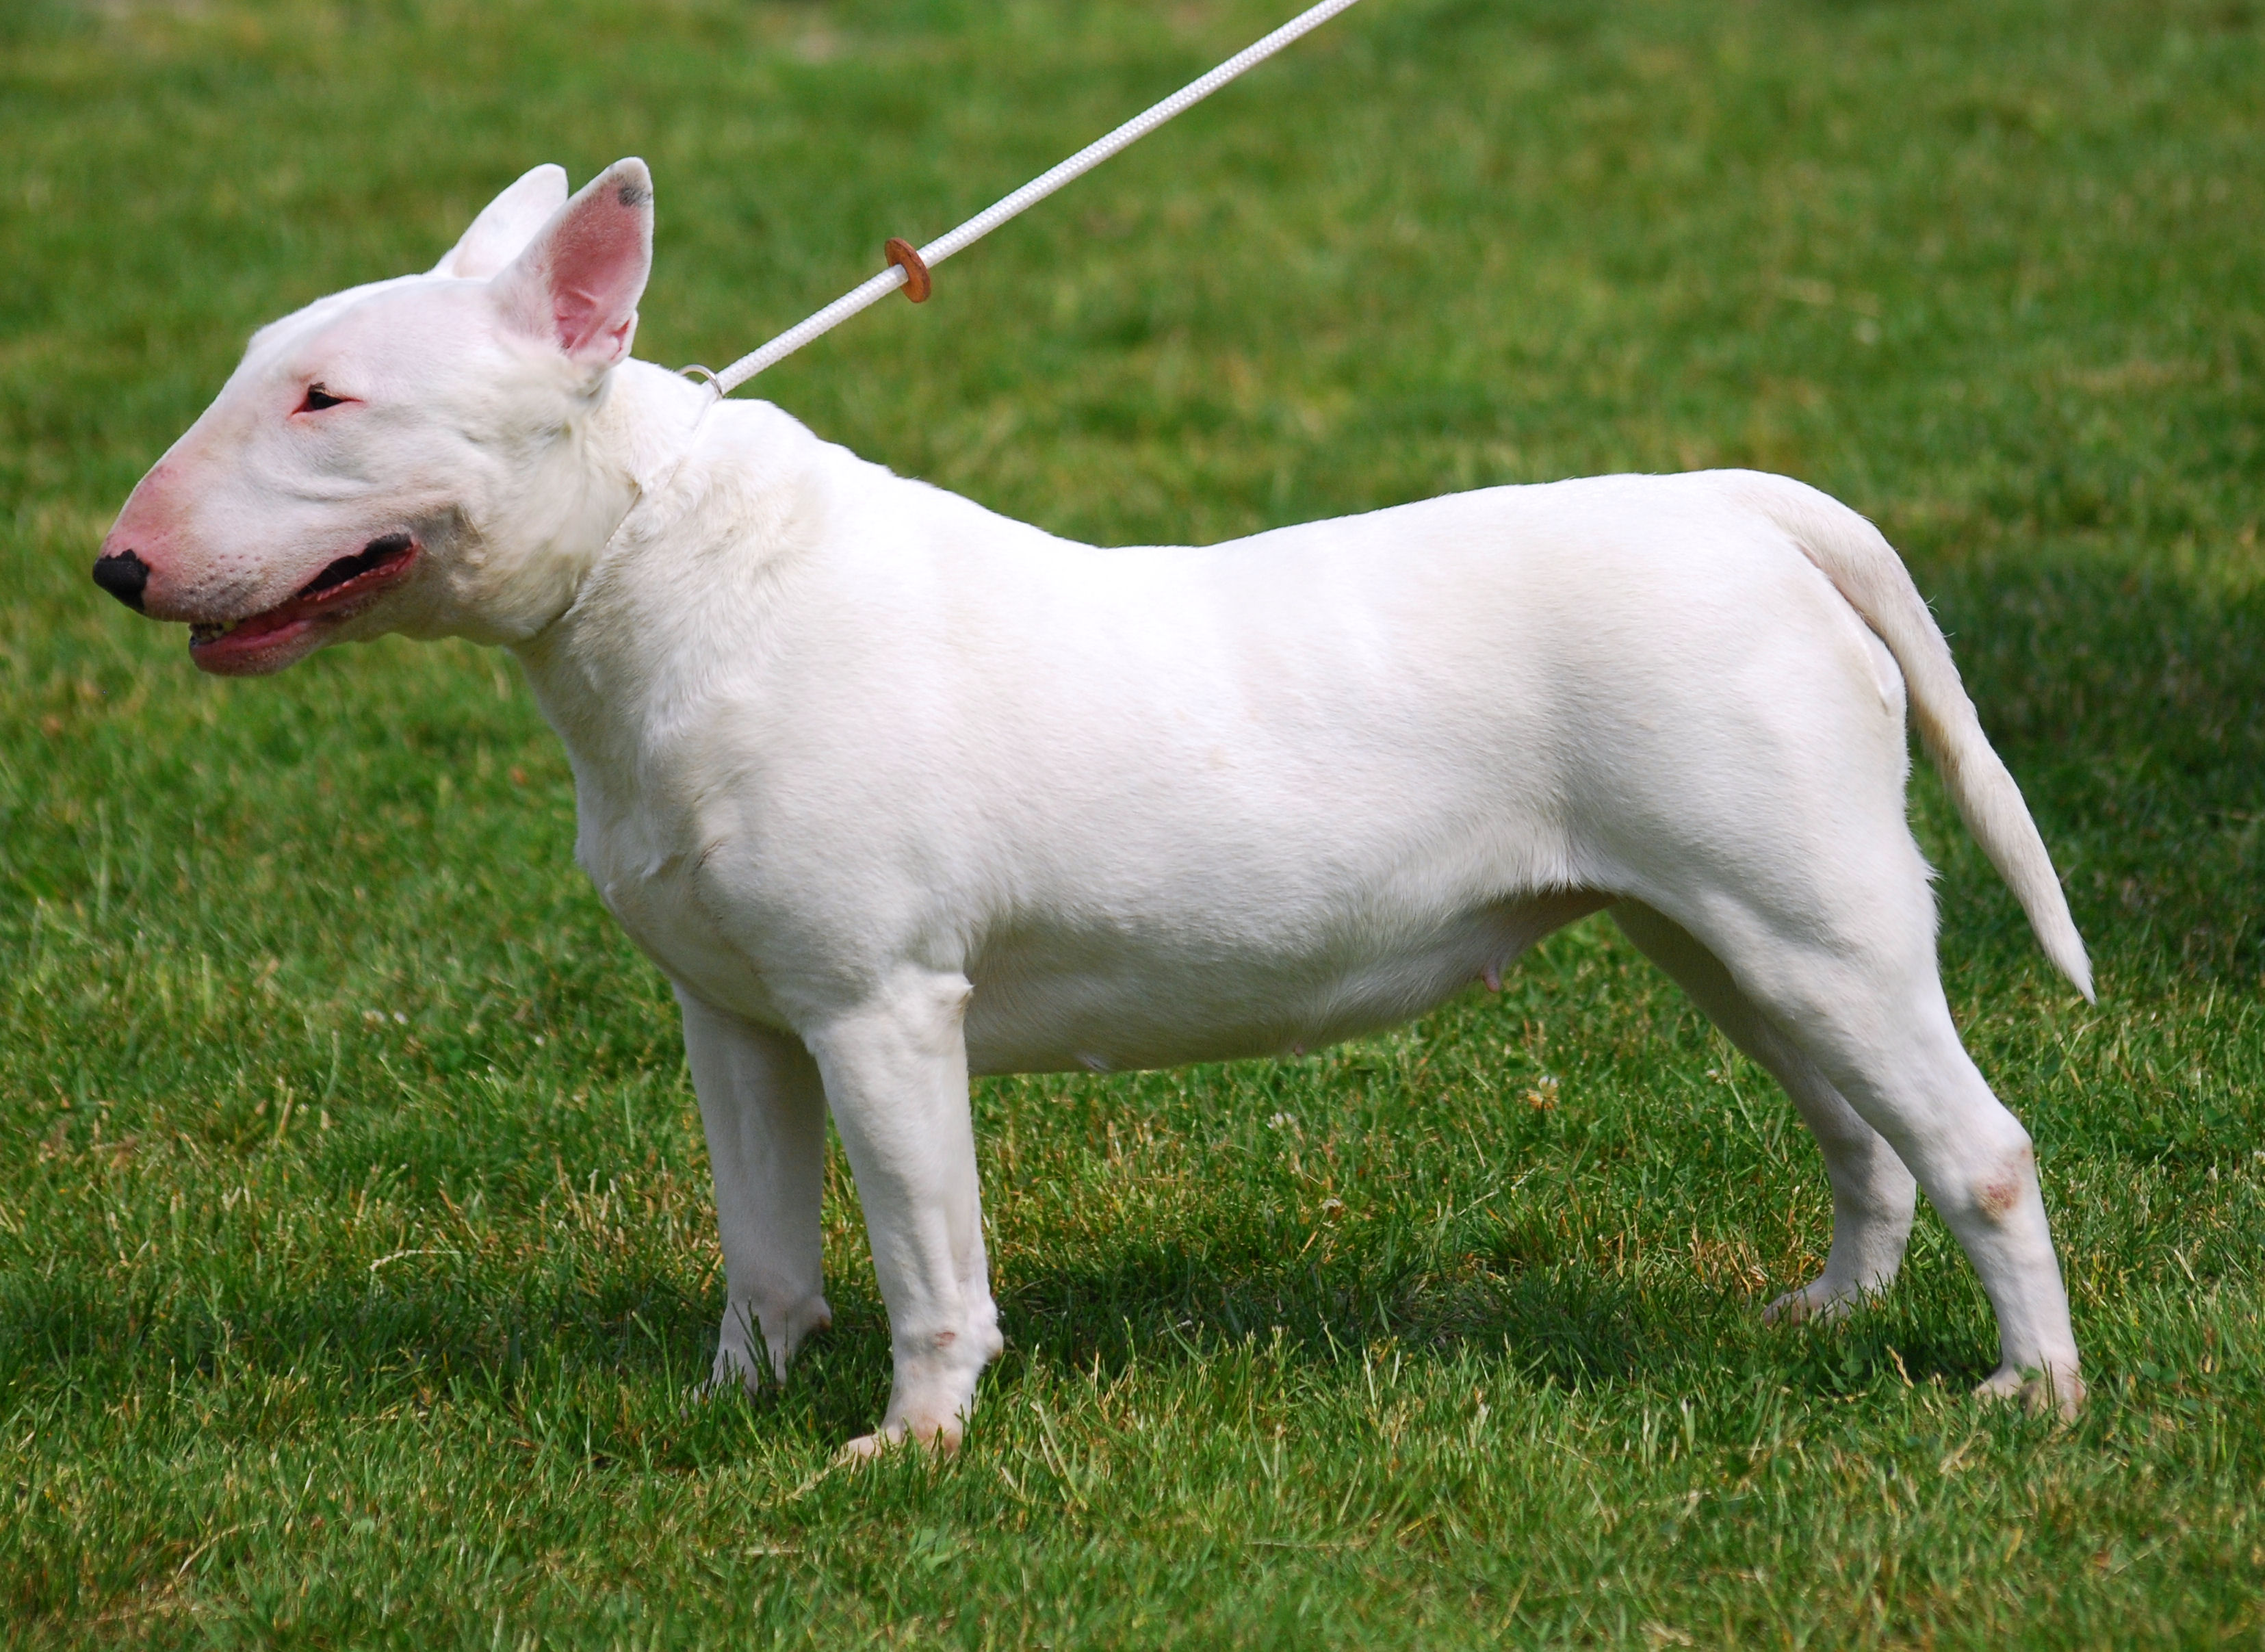 Staffordshire Bull Terrier - Wikipedia